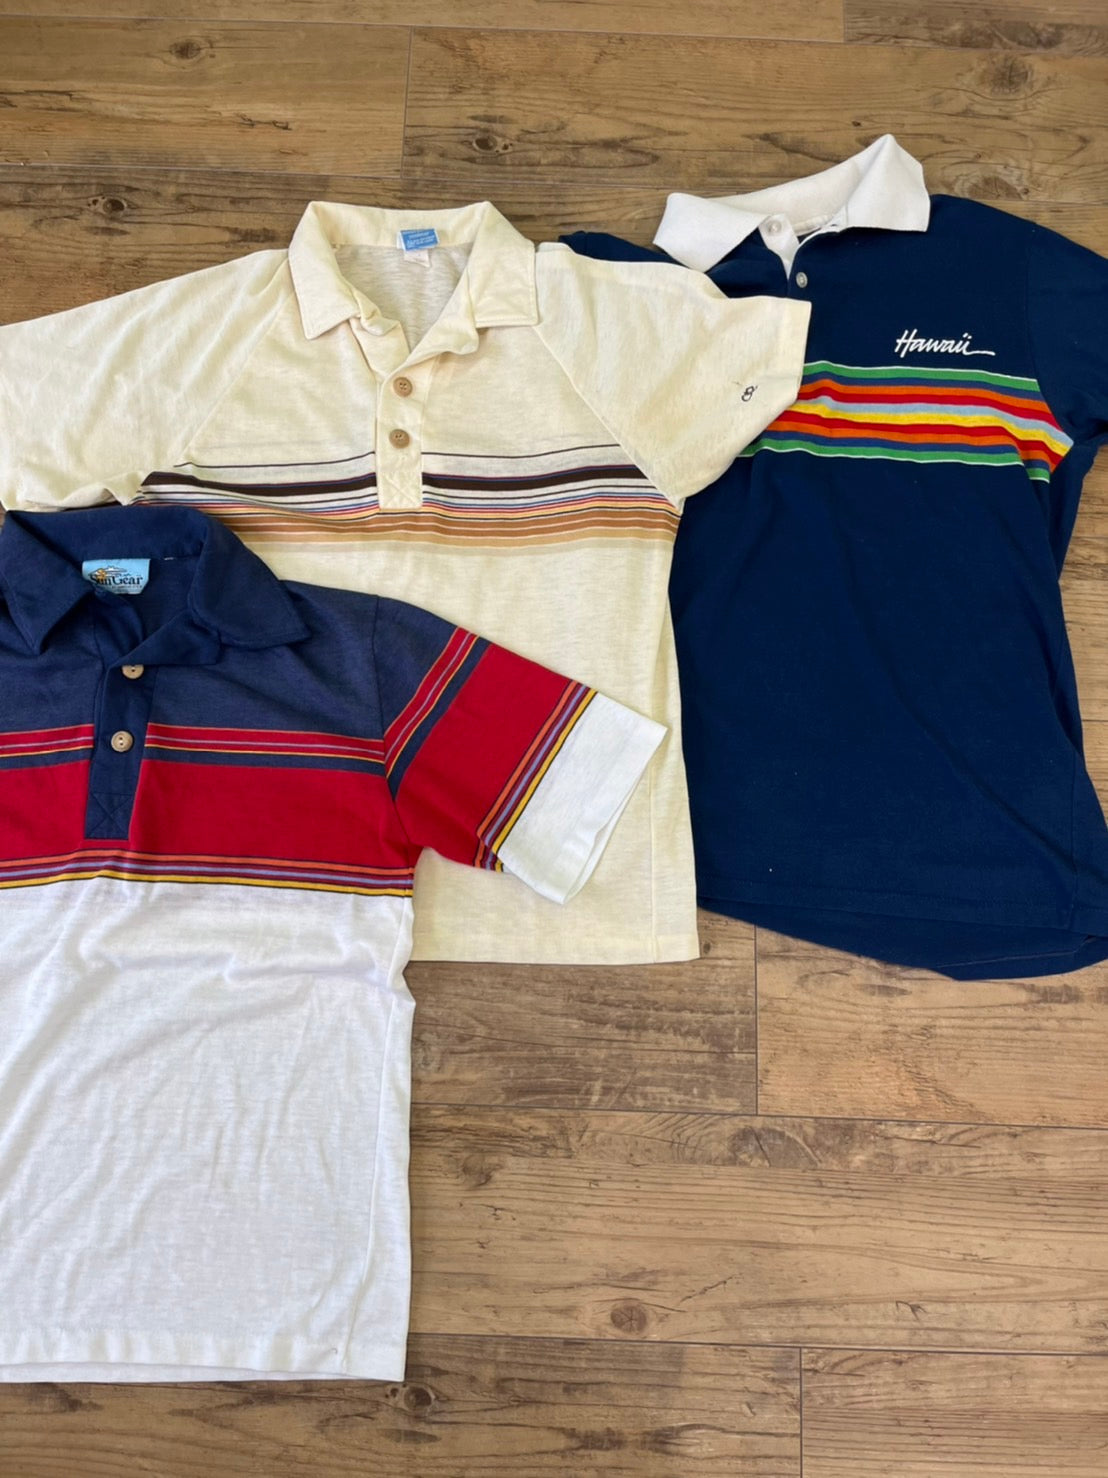 【Sun Gear】vintage sun gear by Manchester Striped polo shirt